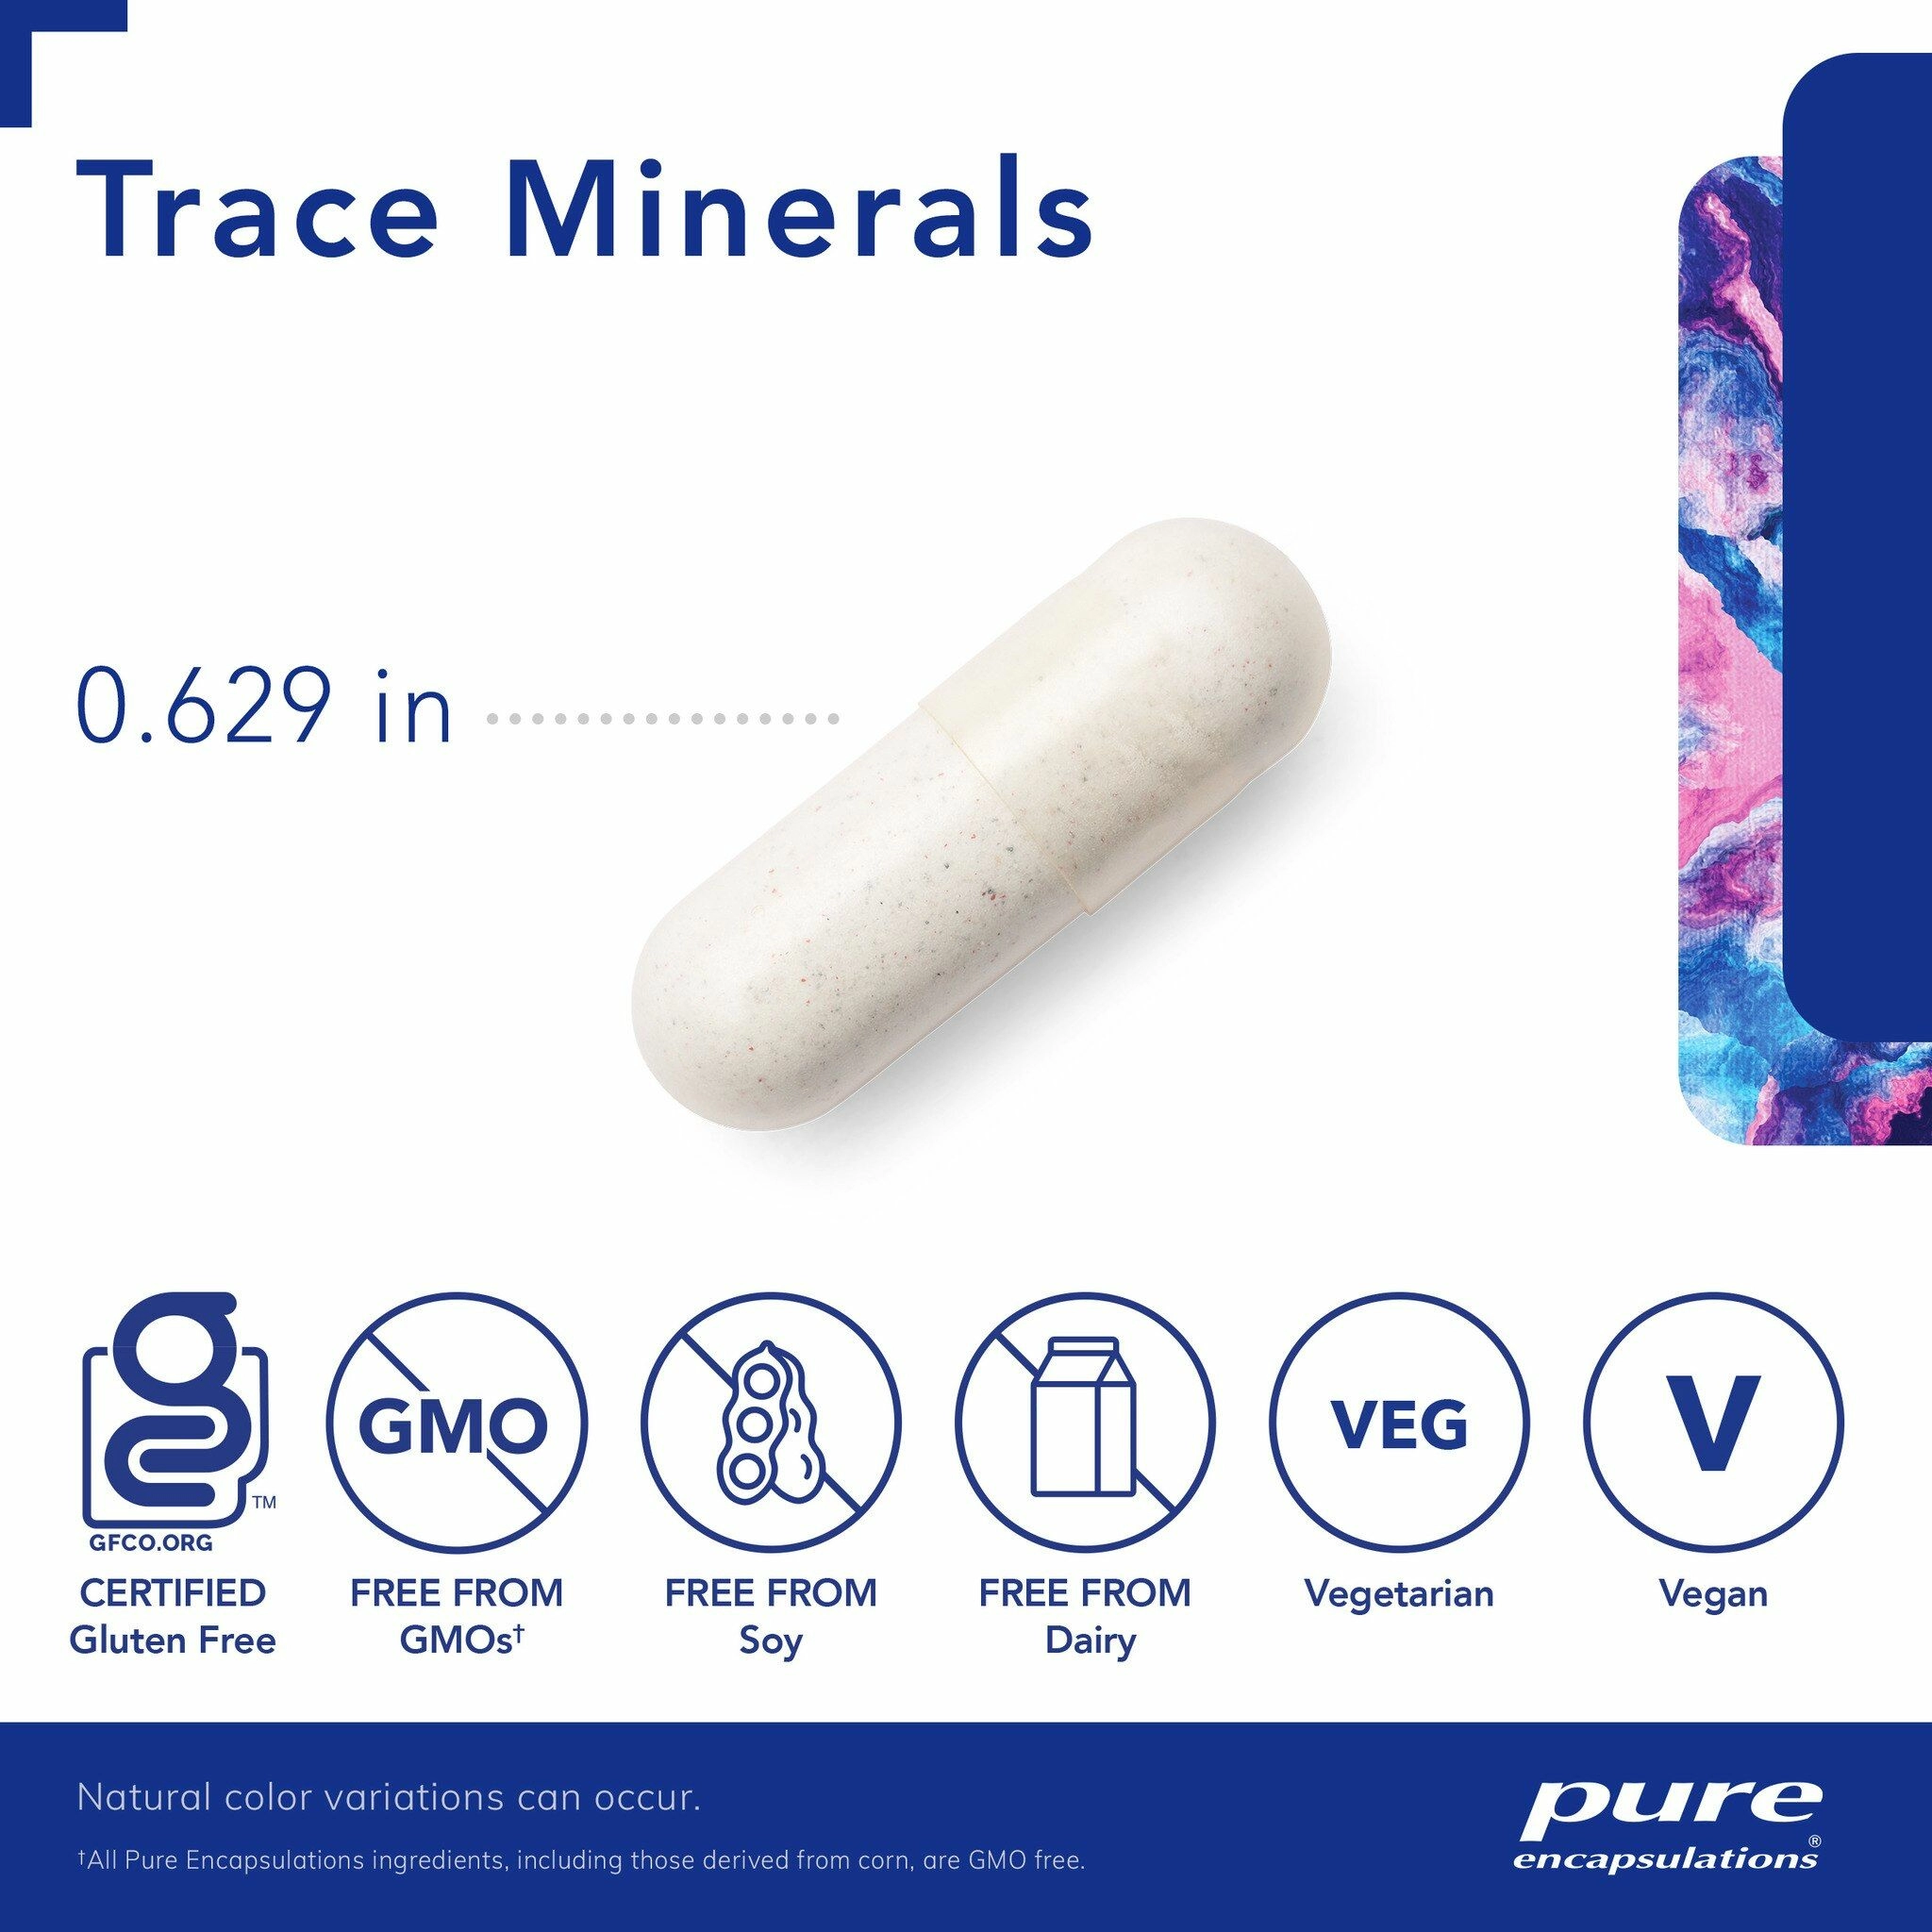 Trace Minerals Image1